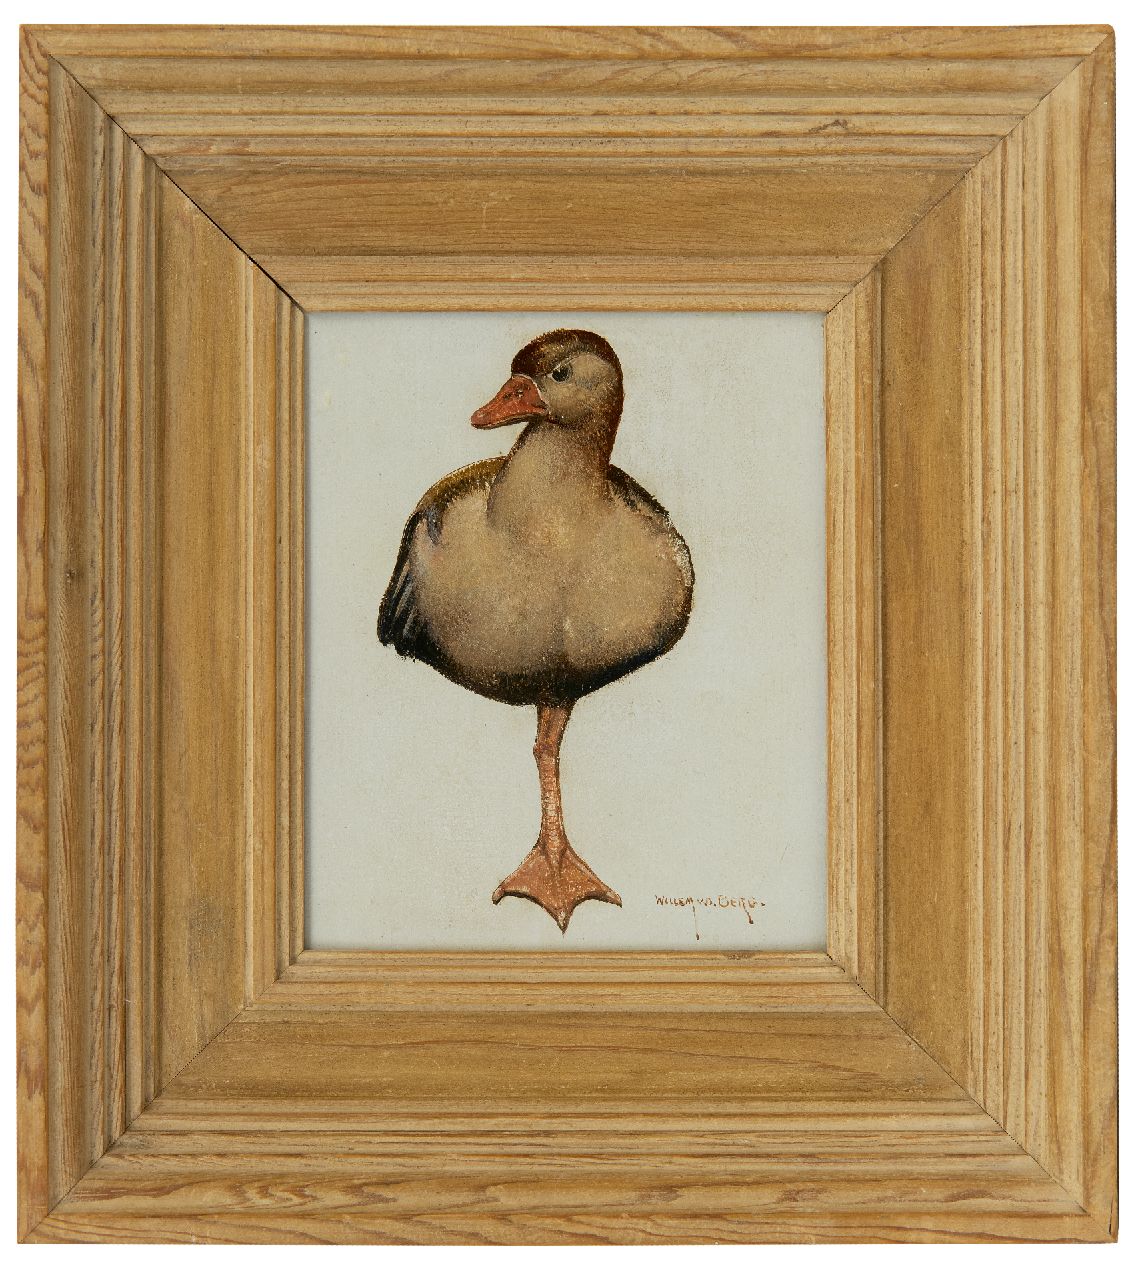 Berg W.H. van den | 'Willem' Hendrik van den Berg | Paintings offered for sale | Resting duck, oil on panel 16.5 x 13.6 cm, signed l.r.